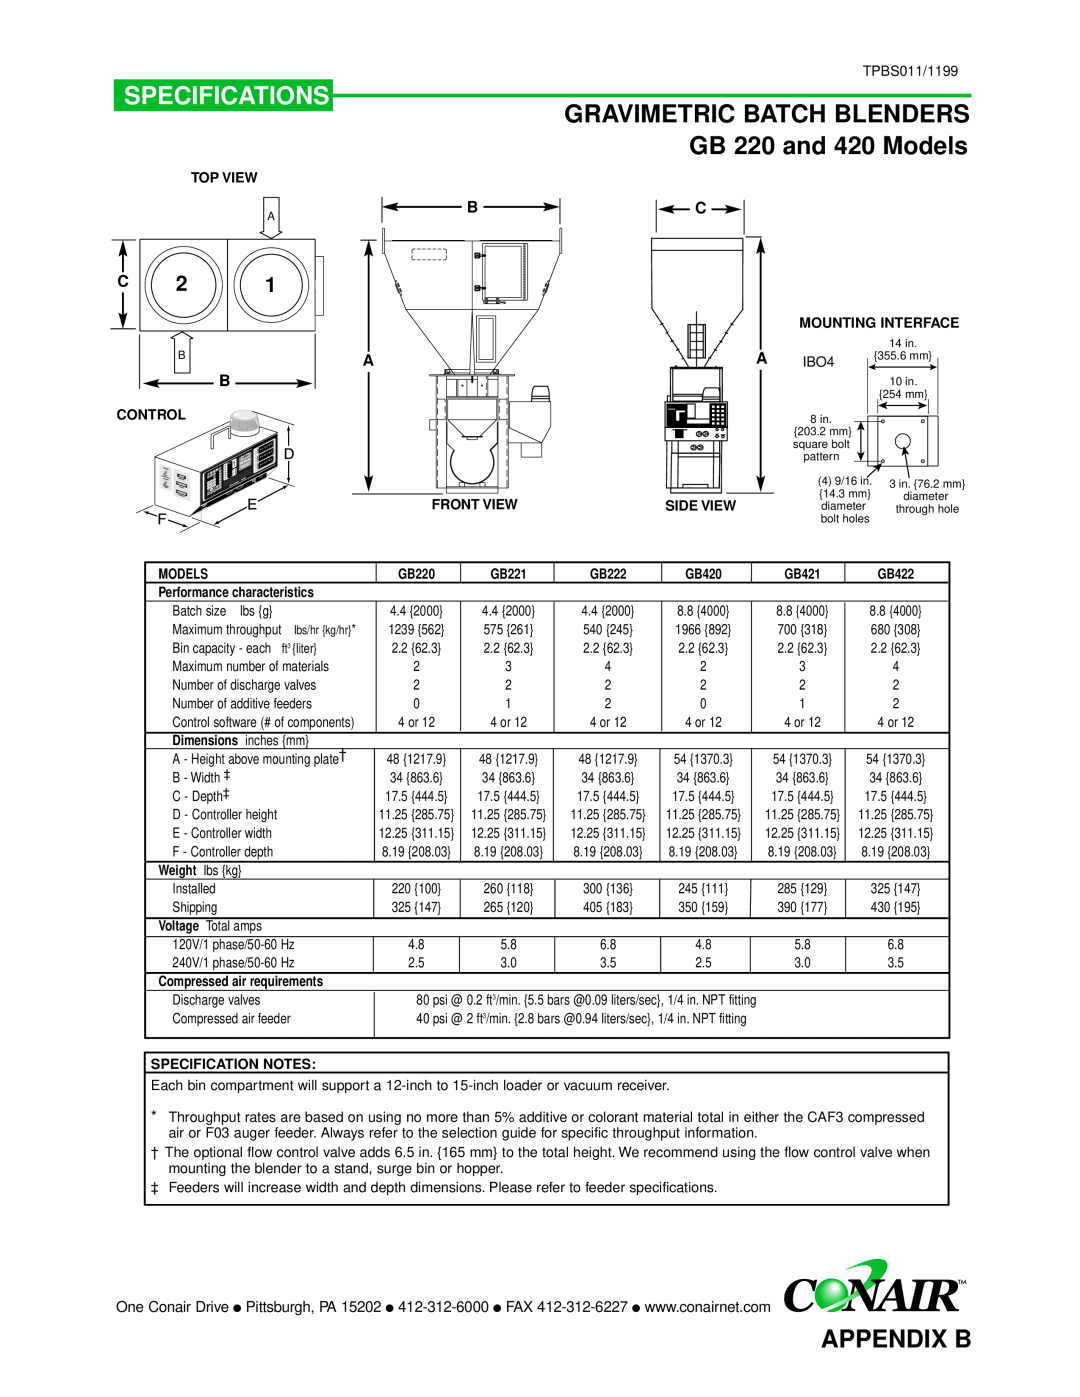 Conair WSB manual GRAVIMETRIC BATCH BLENDERS GB 220 and 420 Models, Specifications, Appendix B 